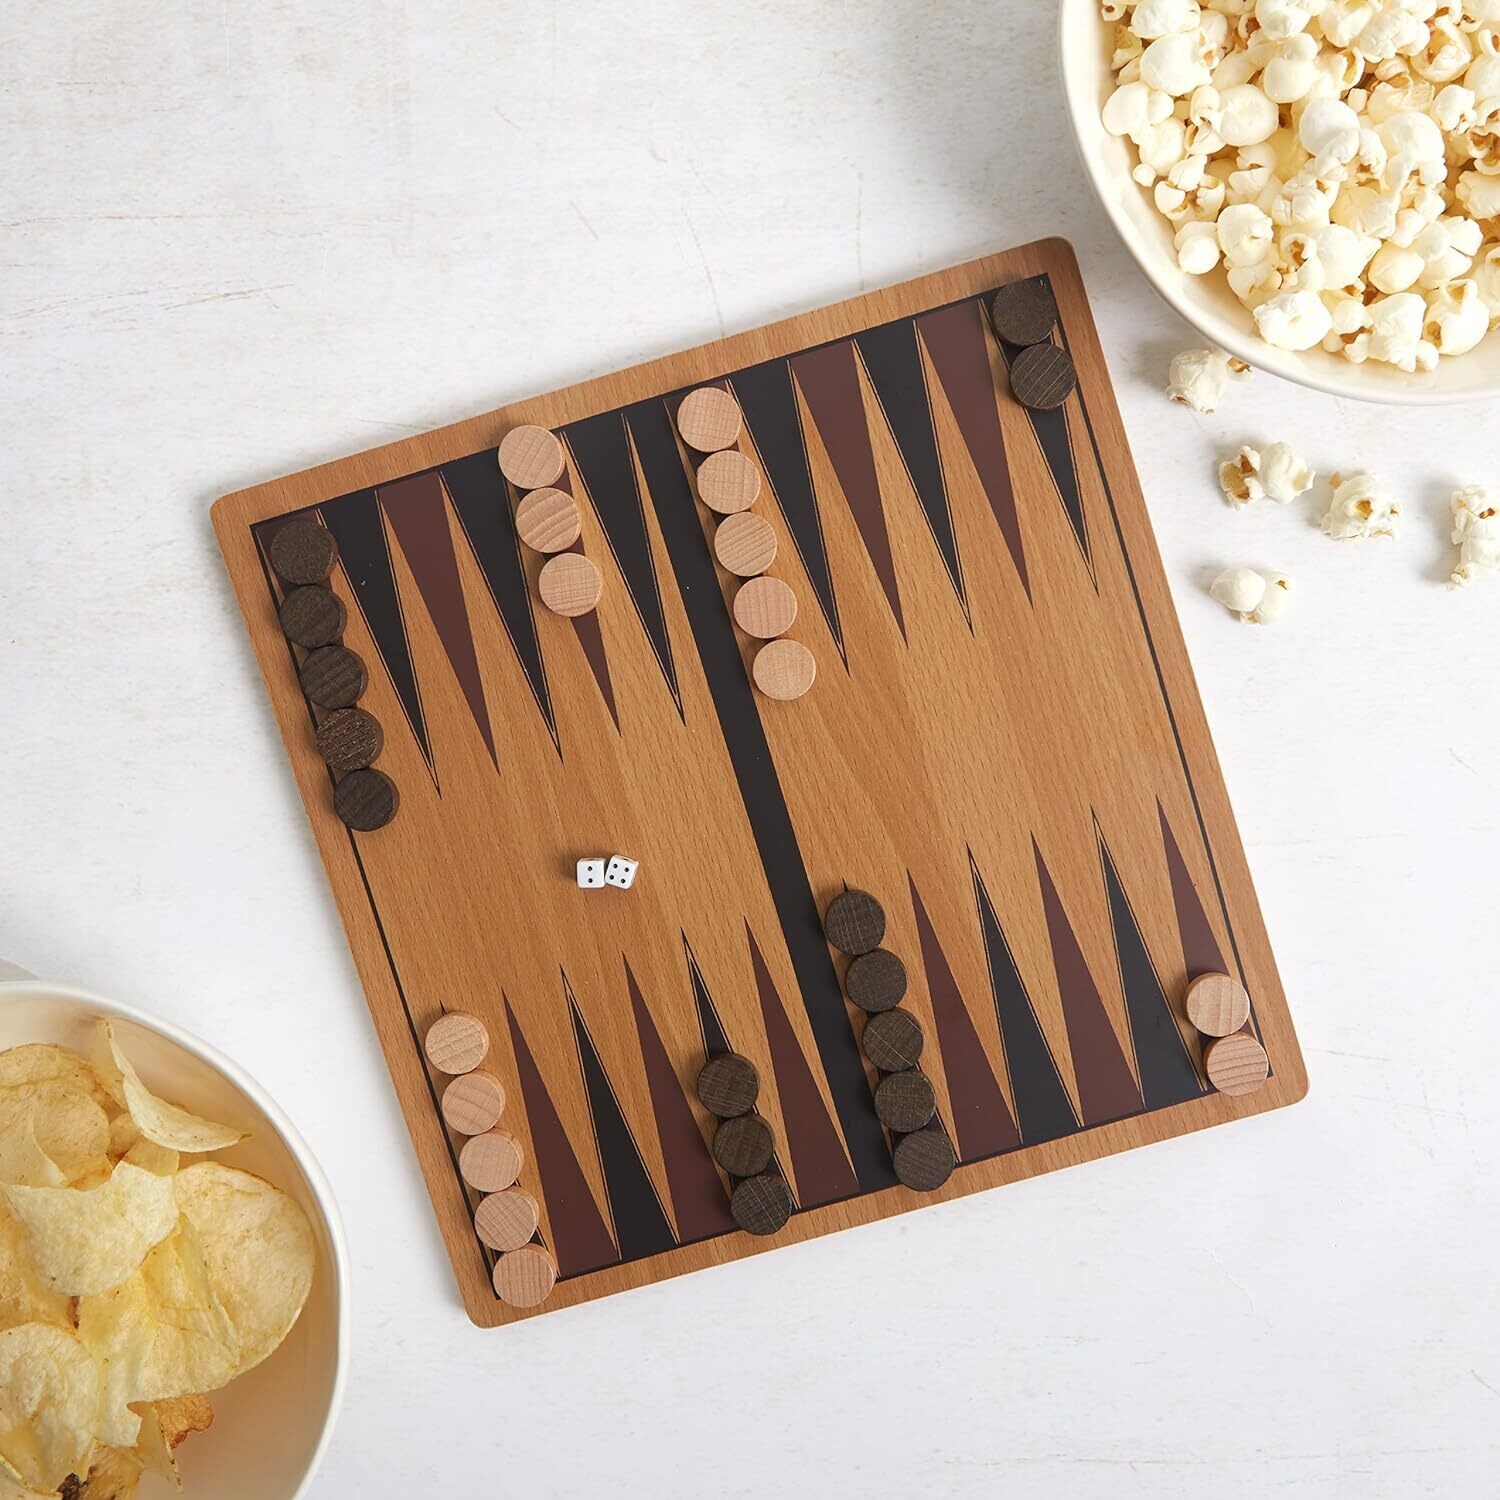 Backgammon Wooden Game Set